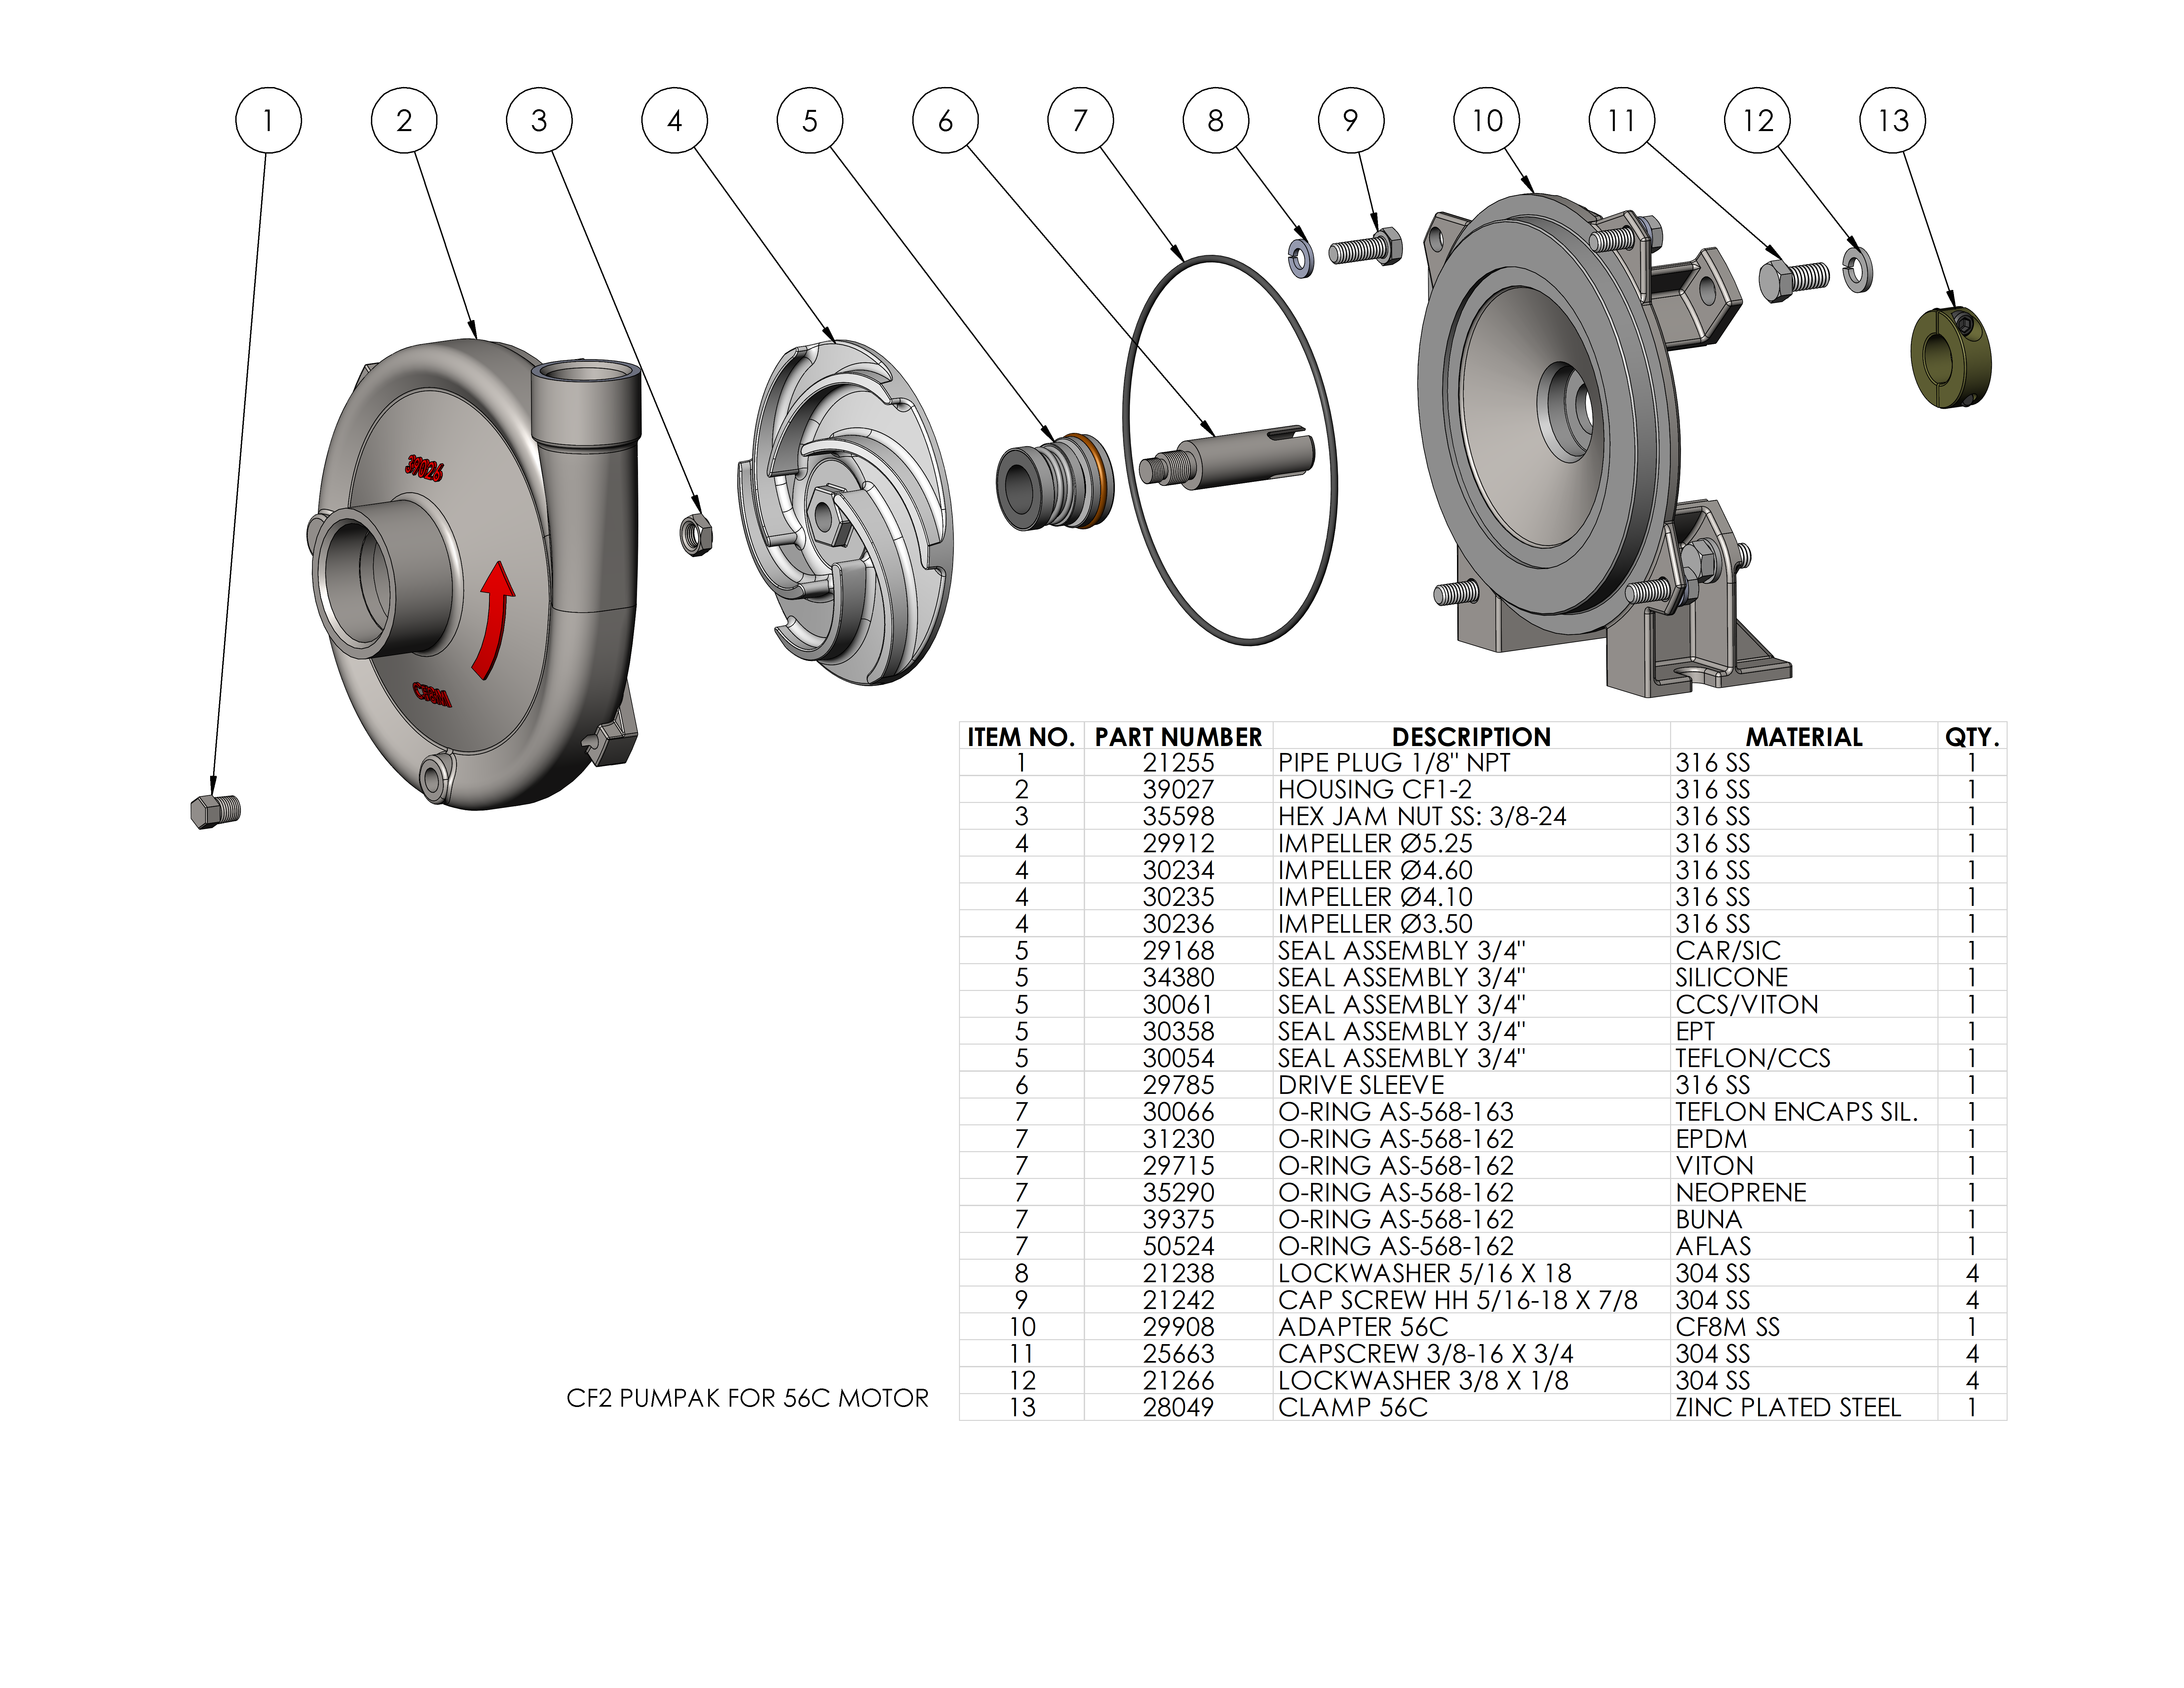 chemflo-2_parts-list-cf2-pumpak-for-56c-motor